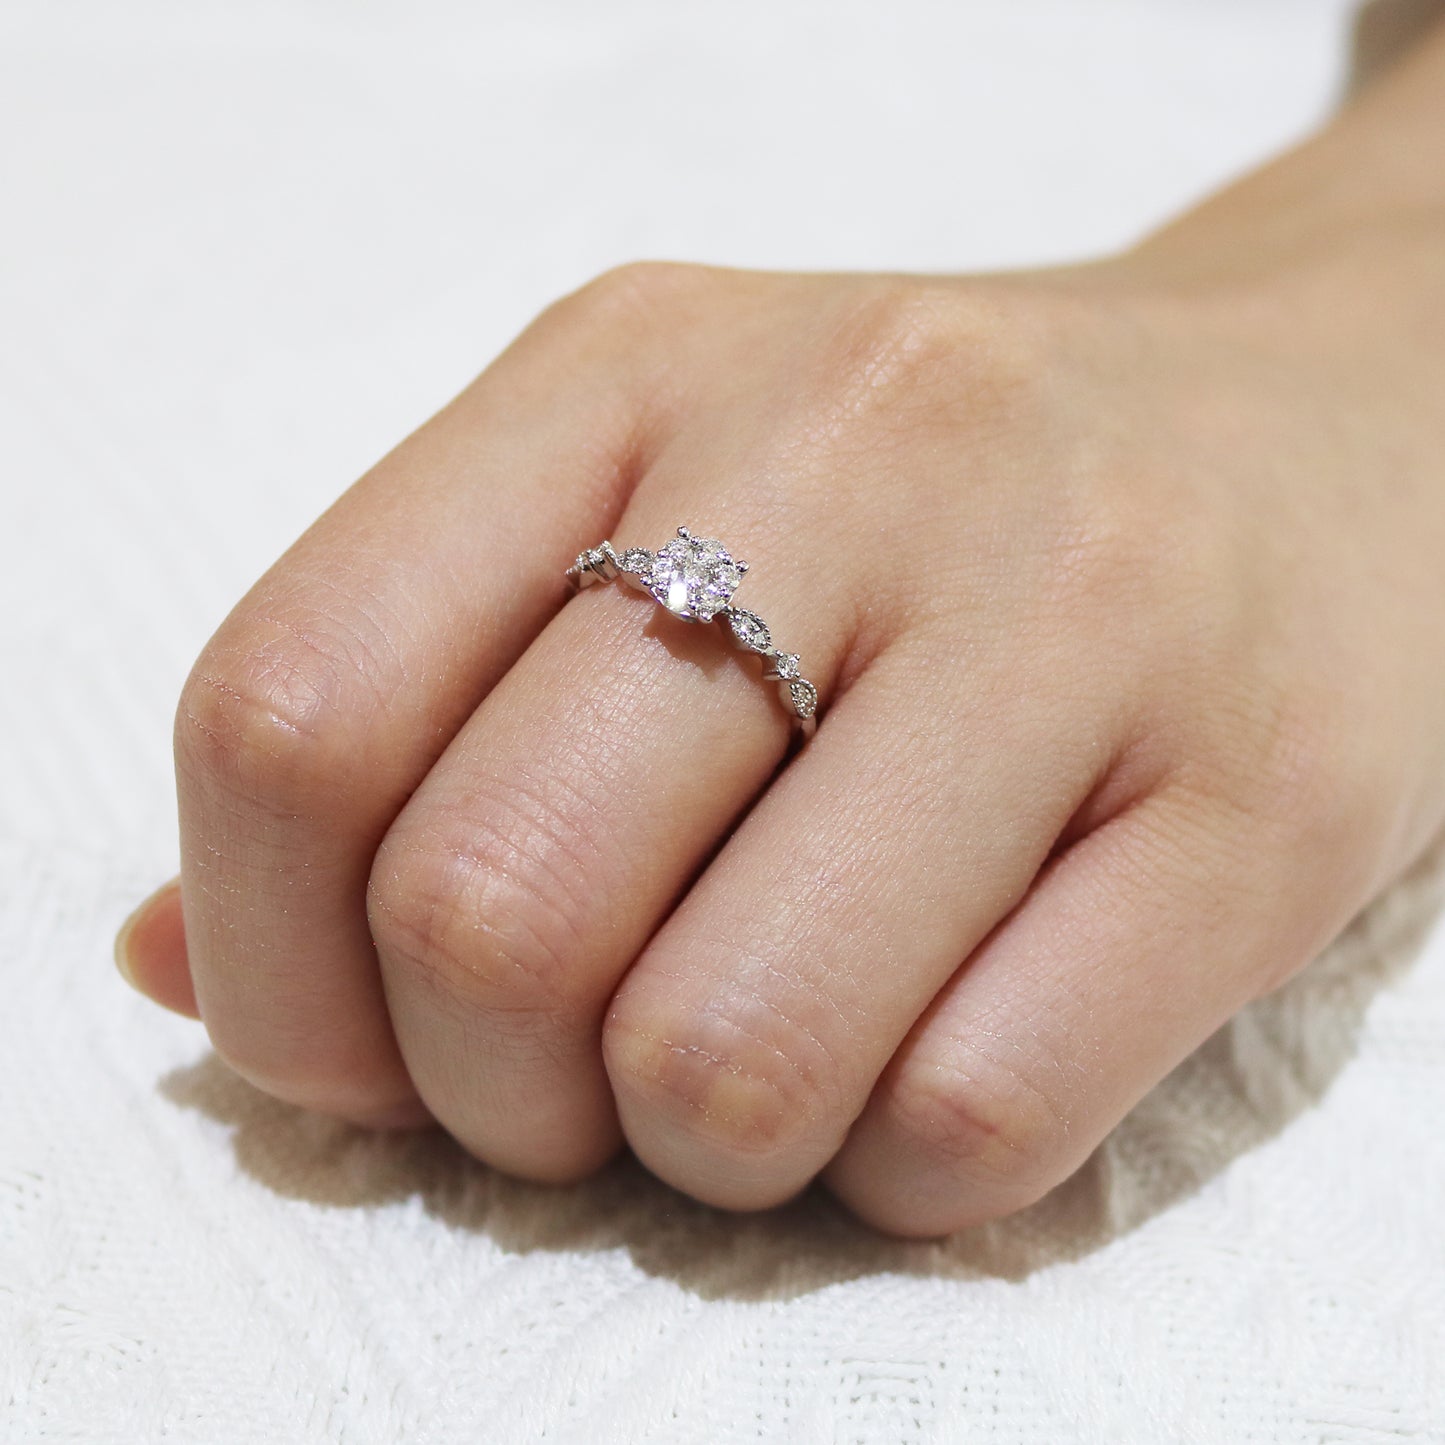 18k白金鑽石碌珠邊復古戒臂戒指在中指上 18k White Gold Beaded Round Brilliant Diamond Ring on finger